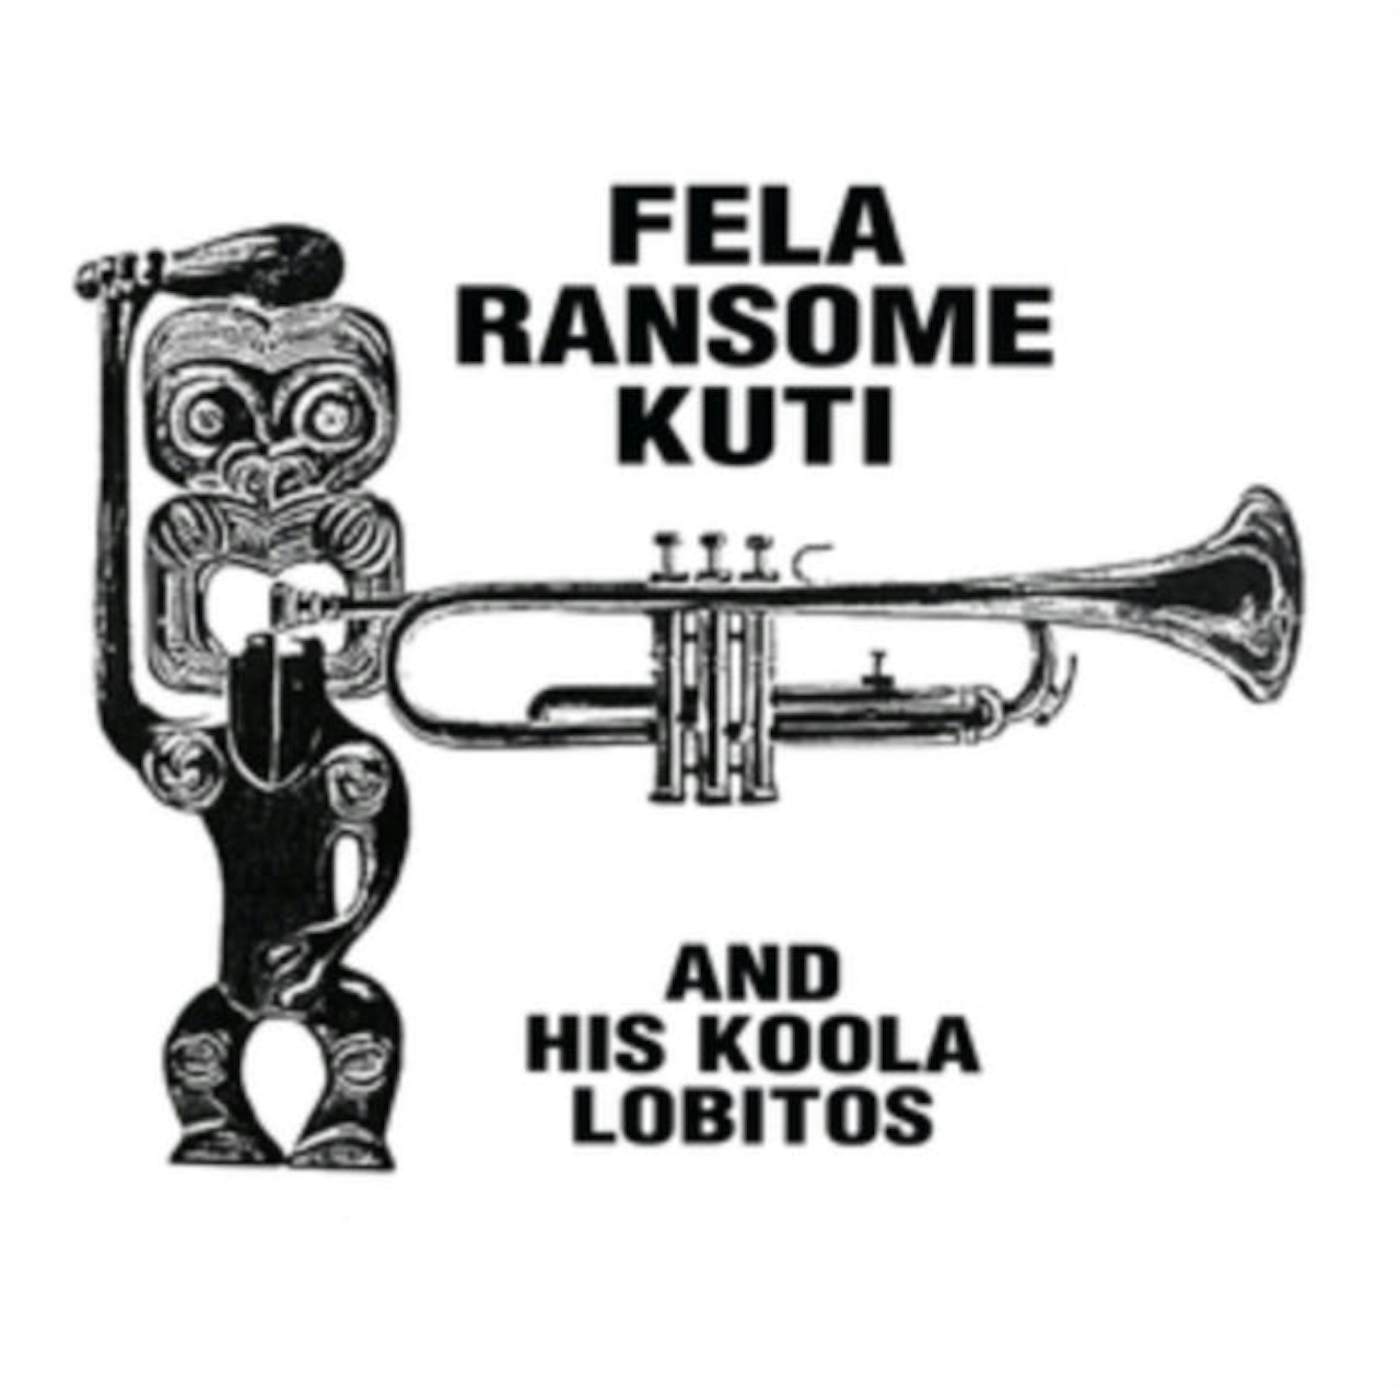 Fela Ransome Kuti & His Koola Lobitos LP Vinyl Record - Fela Ransome Kuti & His Koola Lobitos (Clear Vinyl)